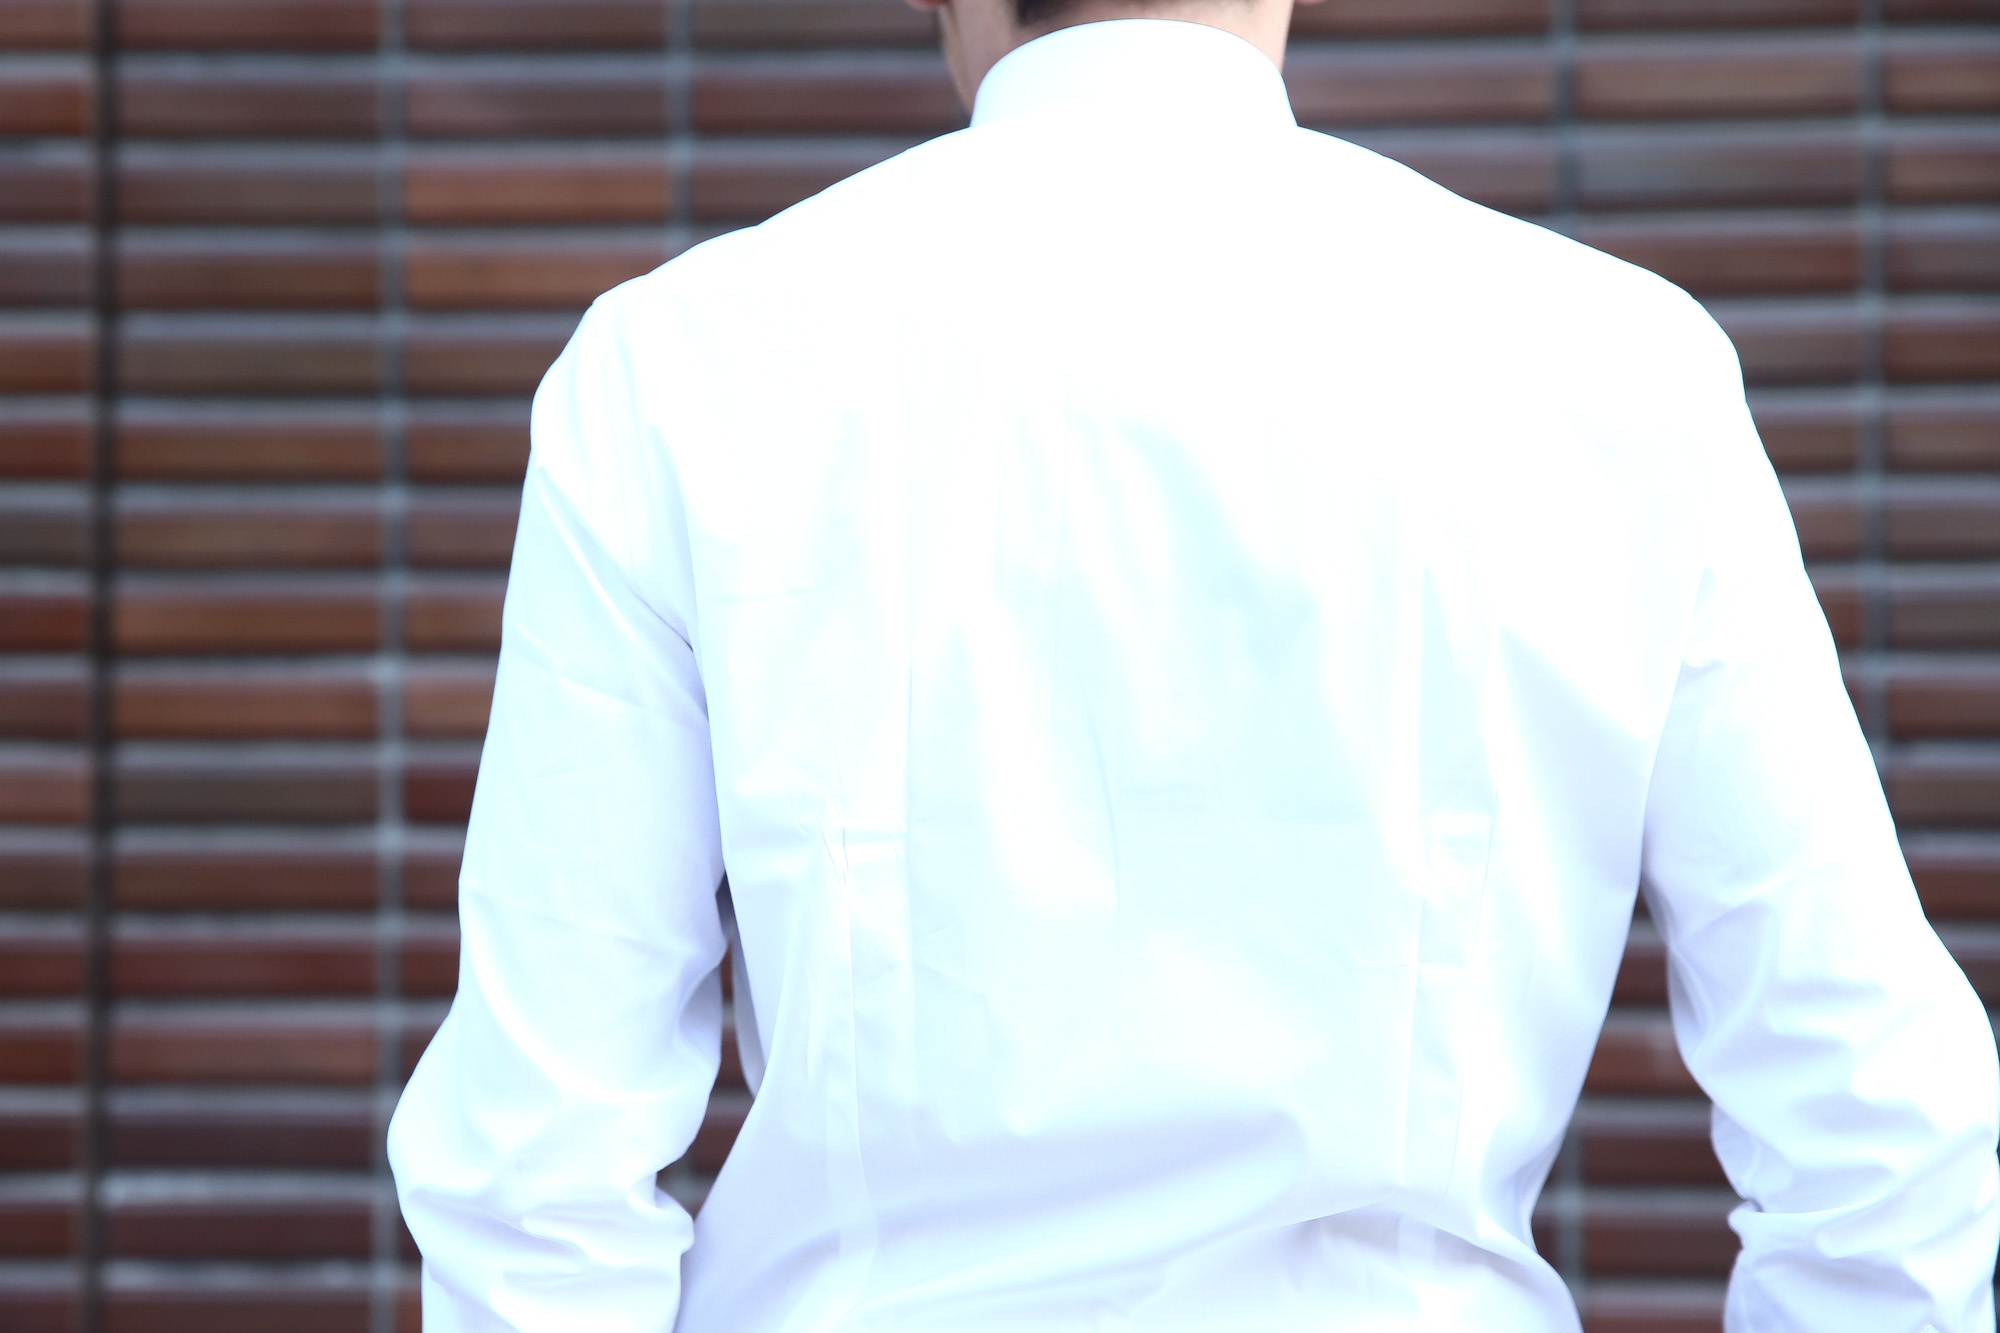 【FRAY / フライ】 Poplin Dress Shirts コットン ブロード ポプリン ドレスシャツ WHITE (ホワイト・1)  made in italy (イタリア製) 2018 春夏新作　fray フライ 愛知 名古屋 Alto e Diritto アルト エ デリット